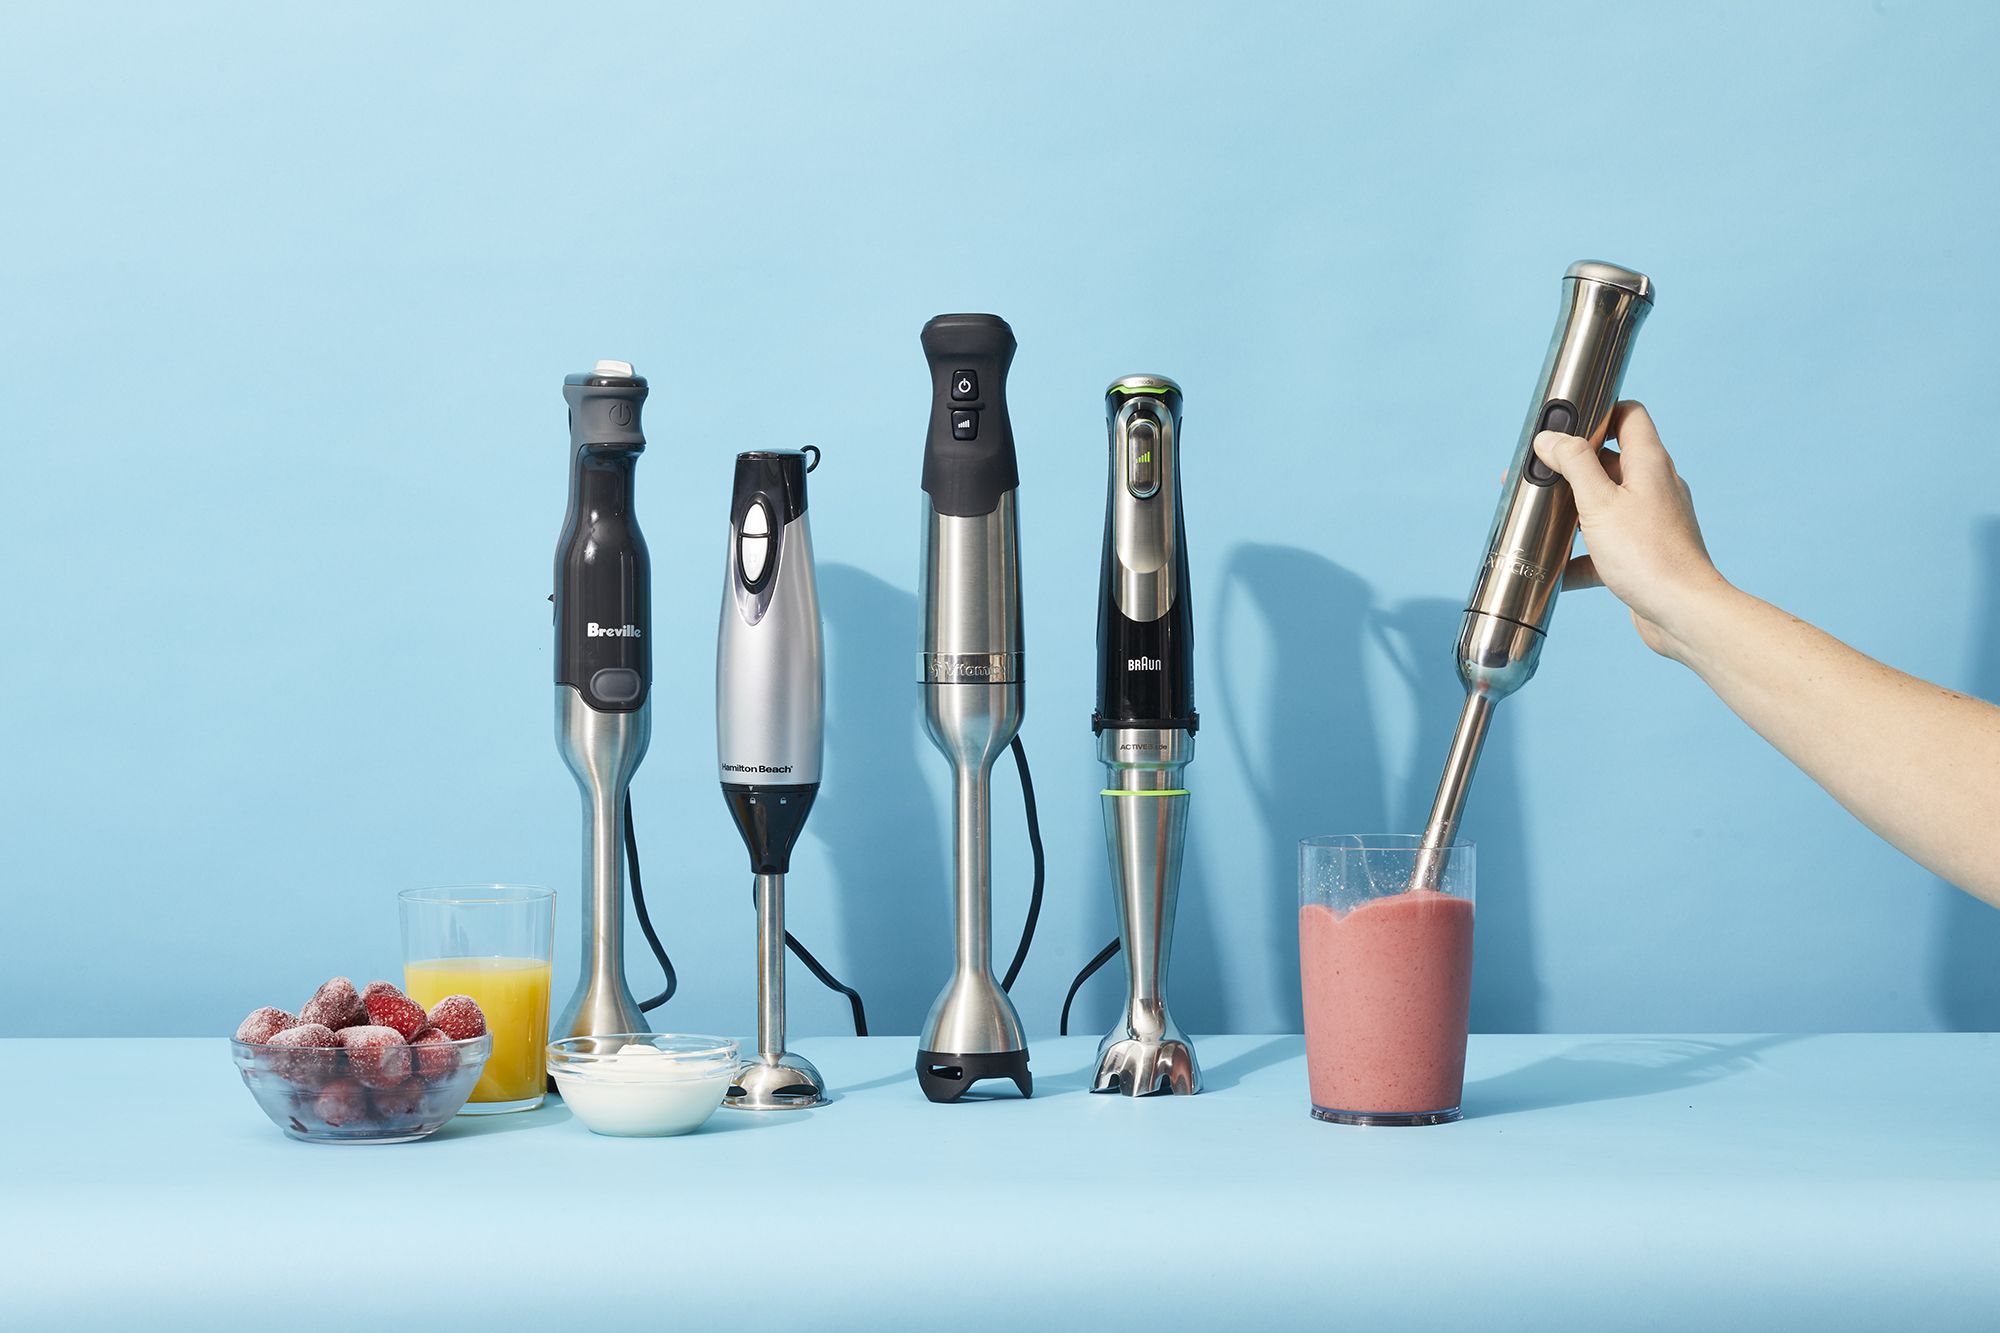 Cordless Stick Blender: Revolutionize Your Kitchen Today!